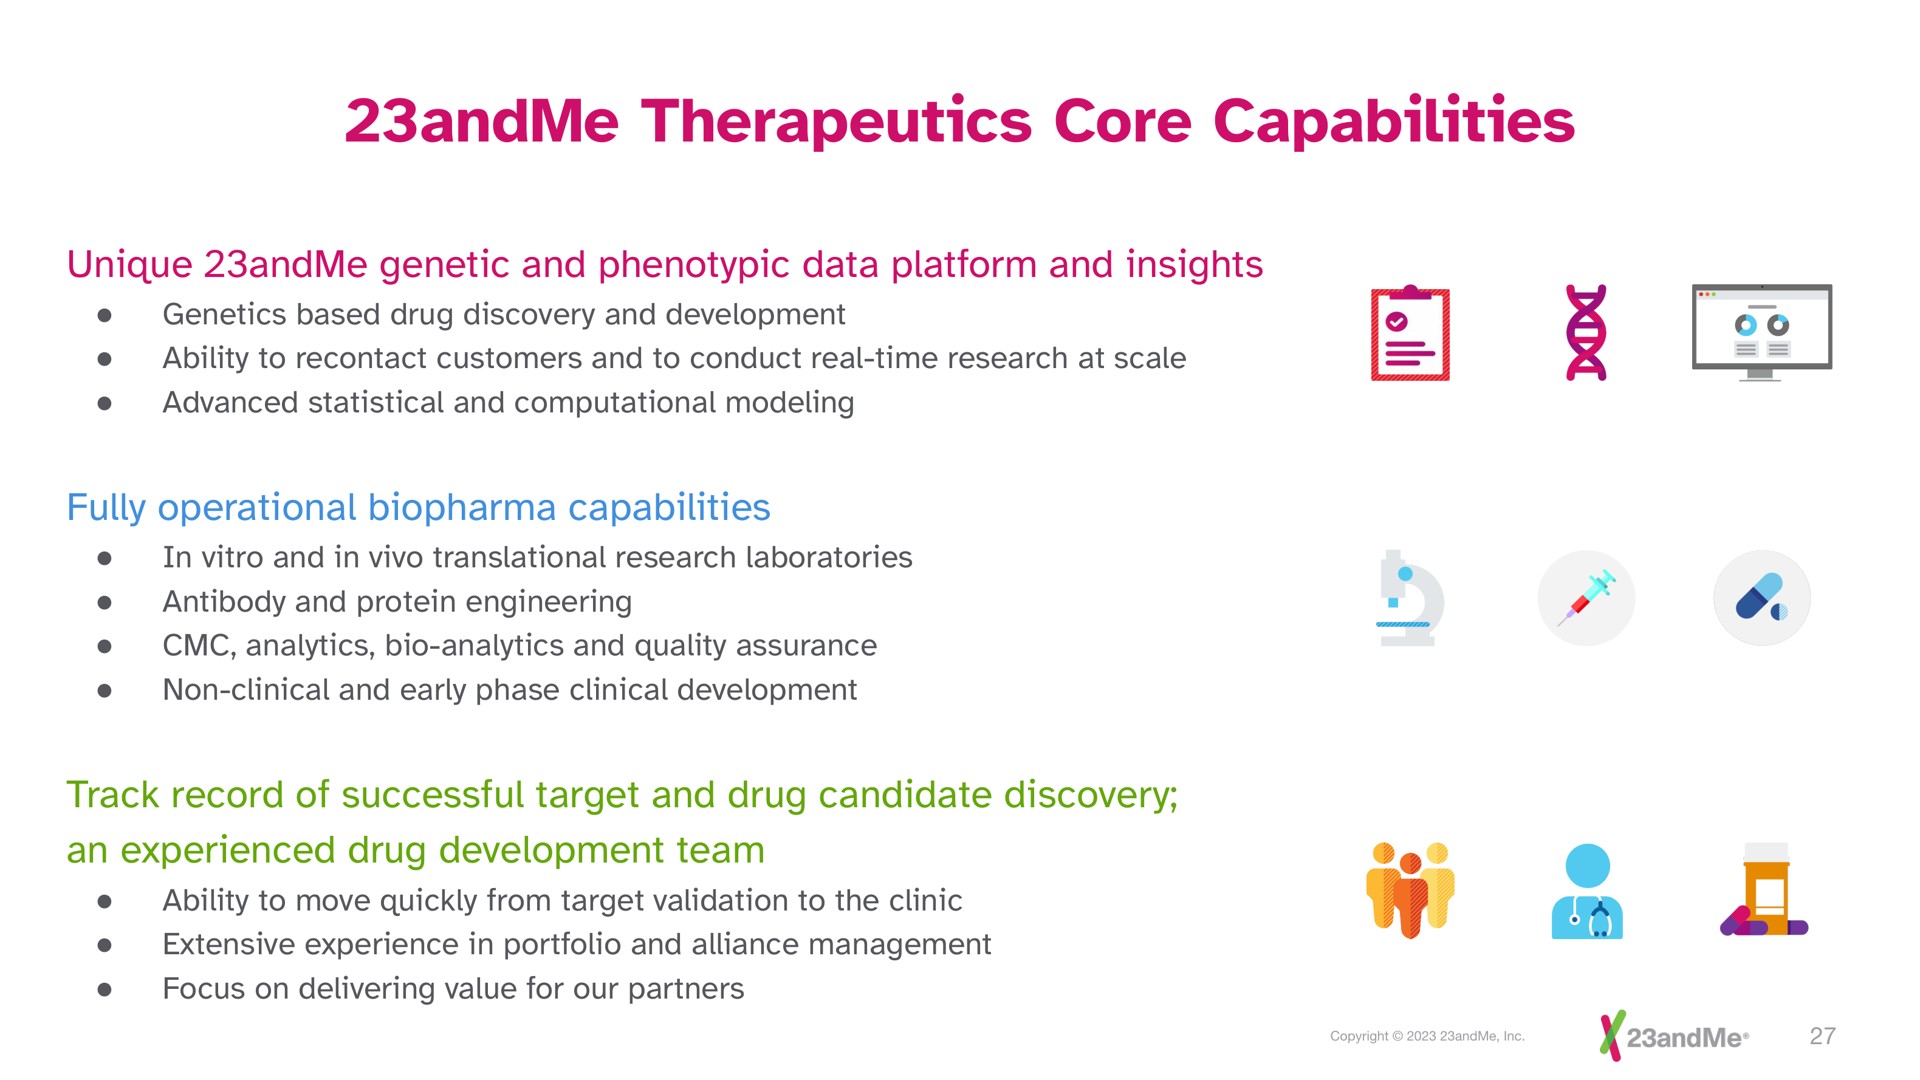 therapeutics core capabilities | 23andMe